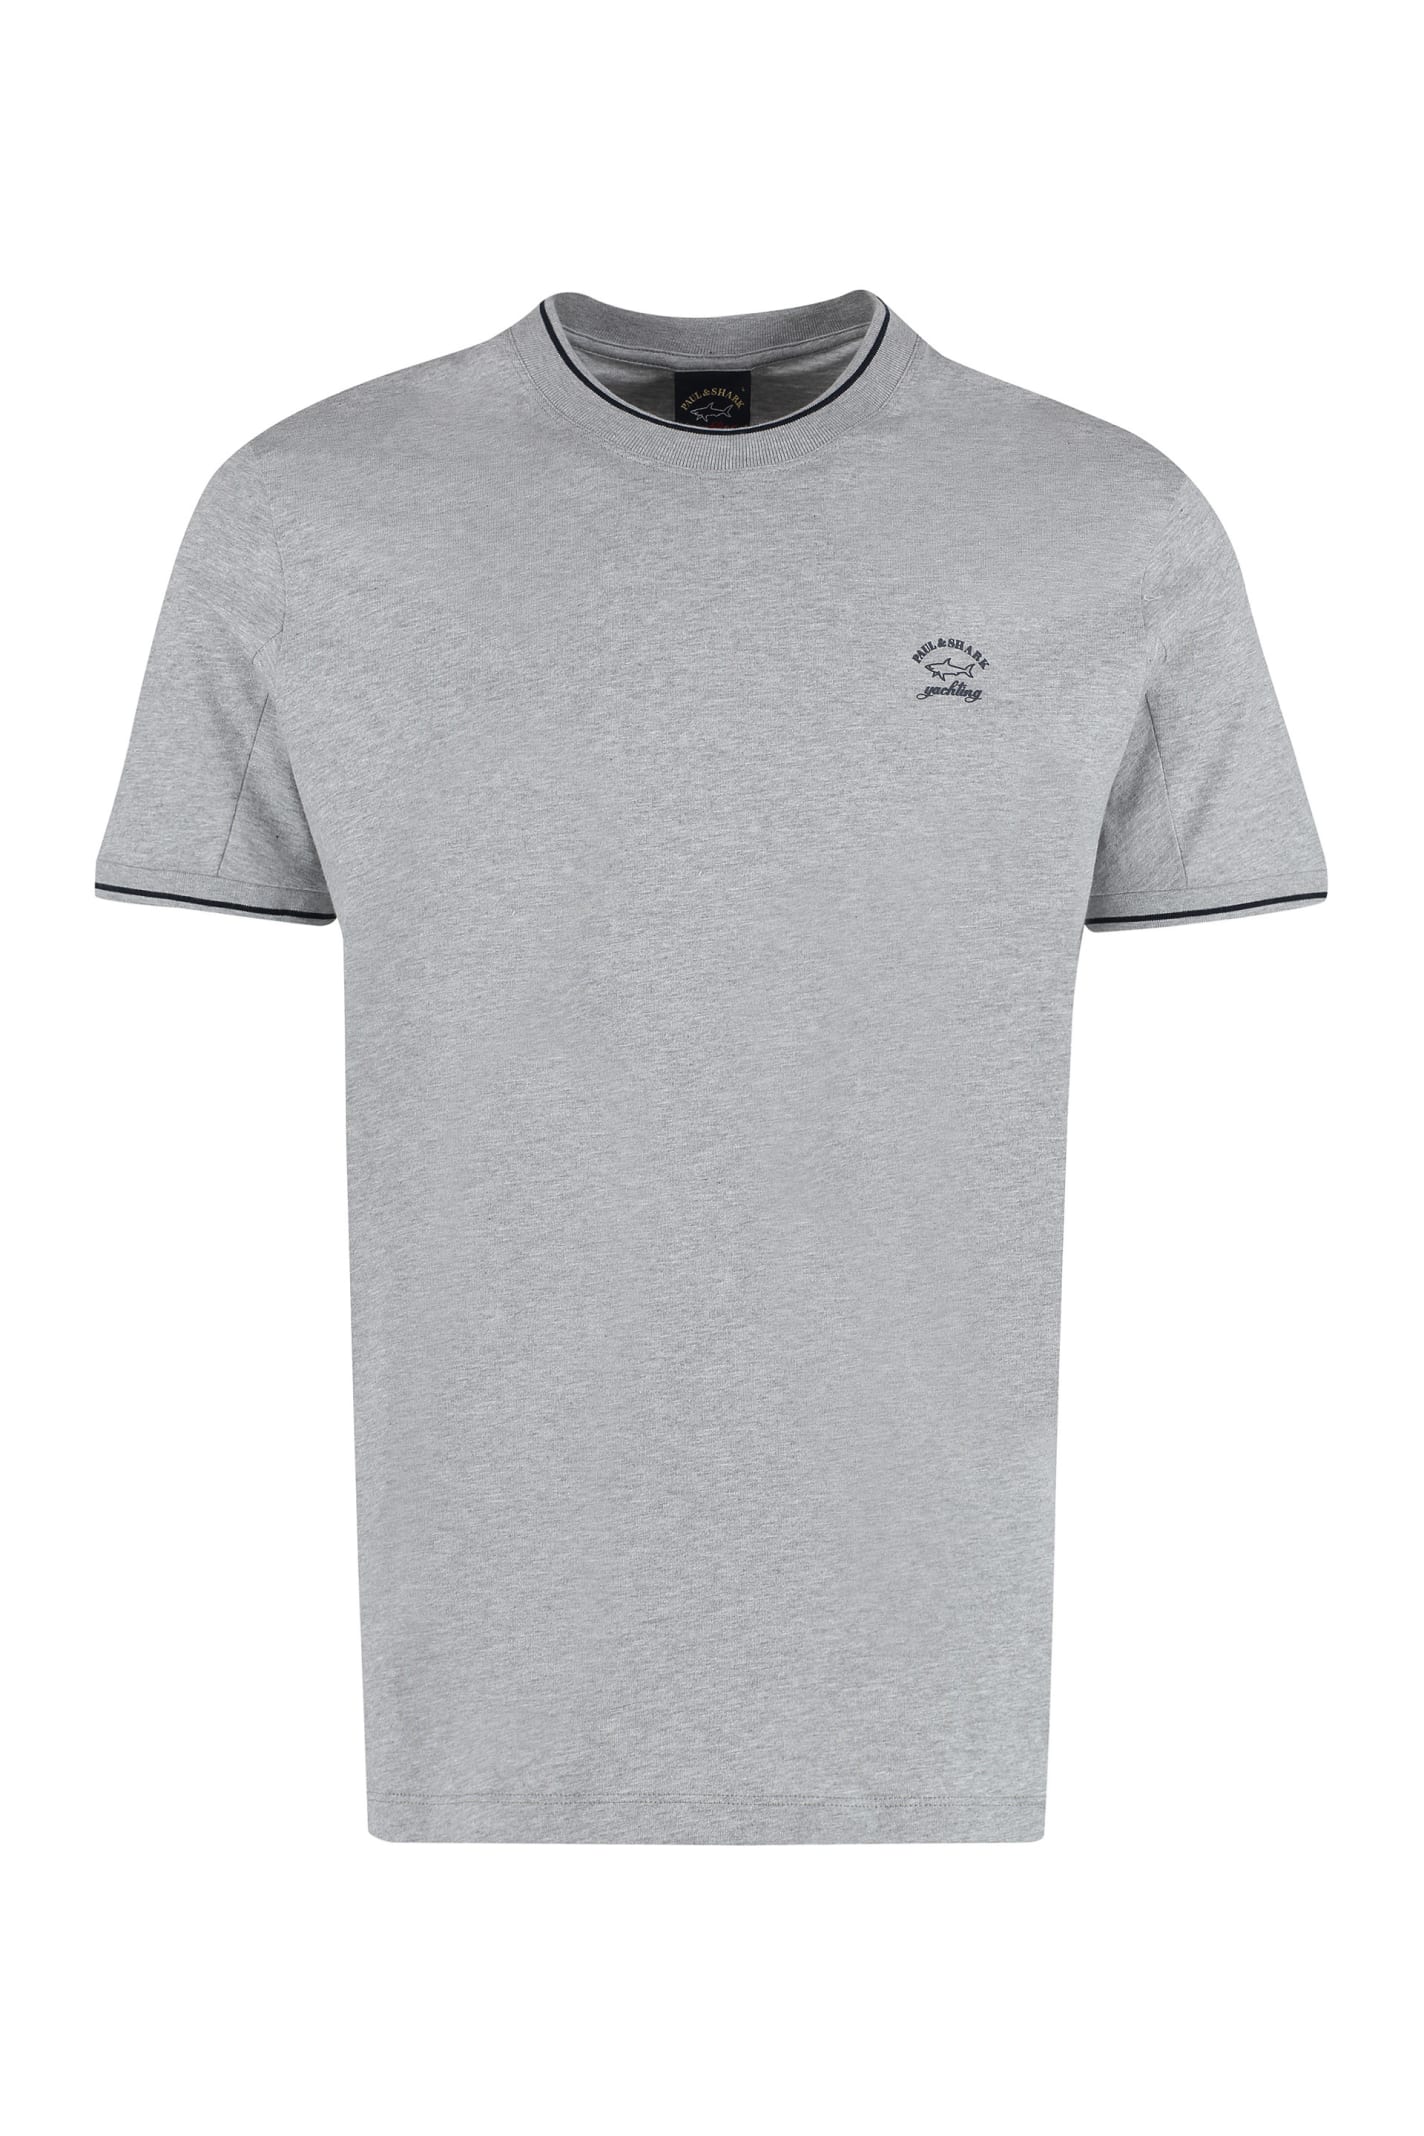 Paul&amp;shark Logo Cotton T-shirt In Grey